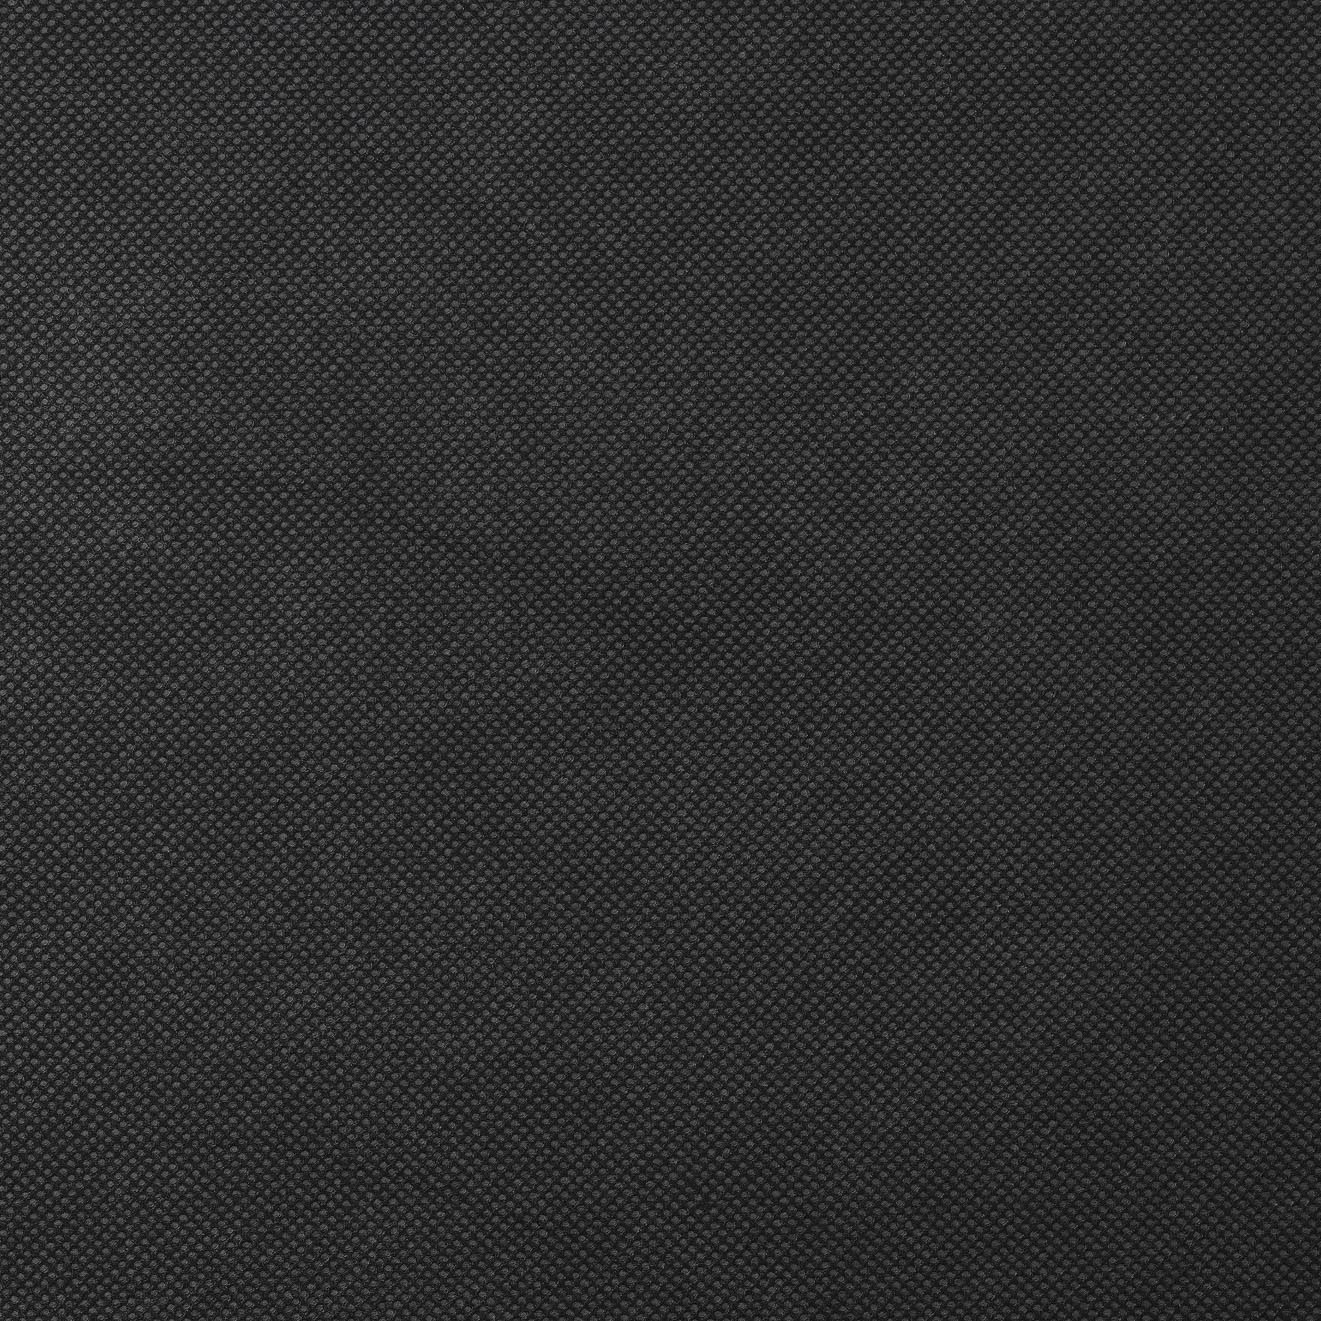 Black Spun Bonded Polypropylene Base Cloth 154cm wide - 70 gsm - Heico ...